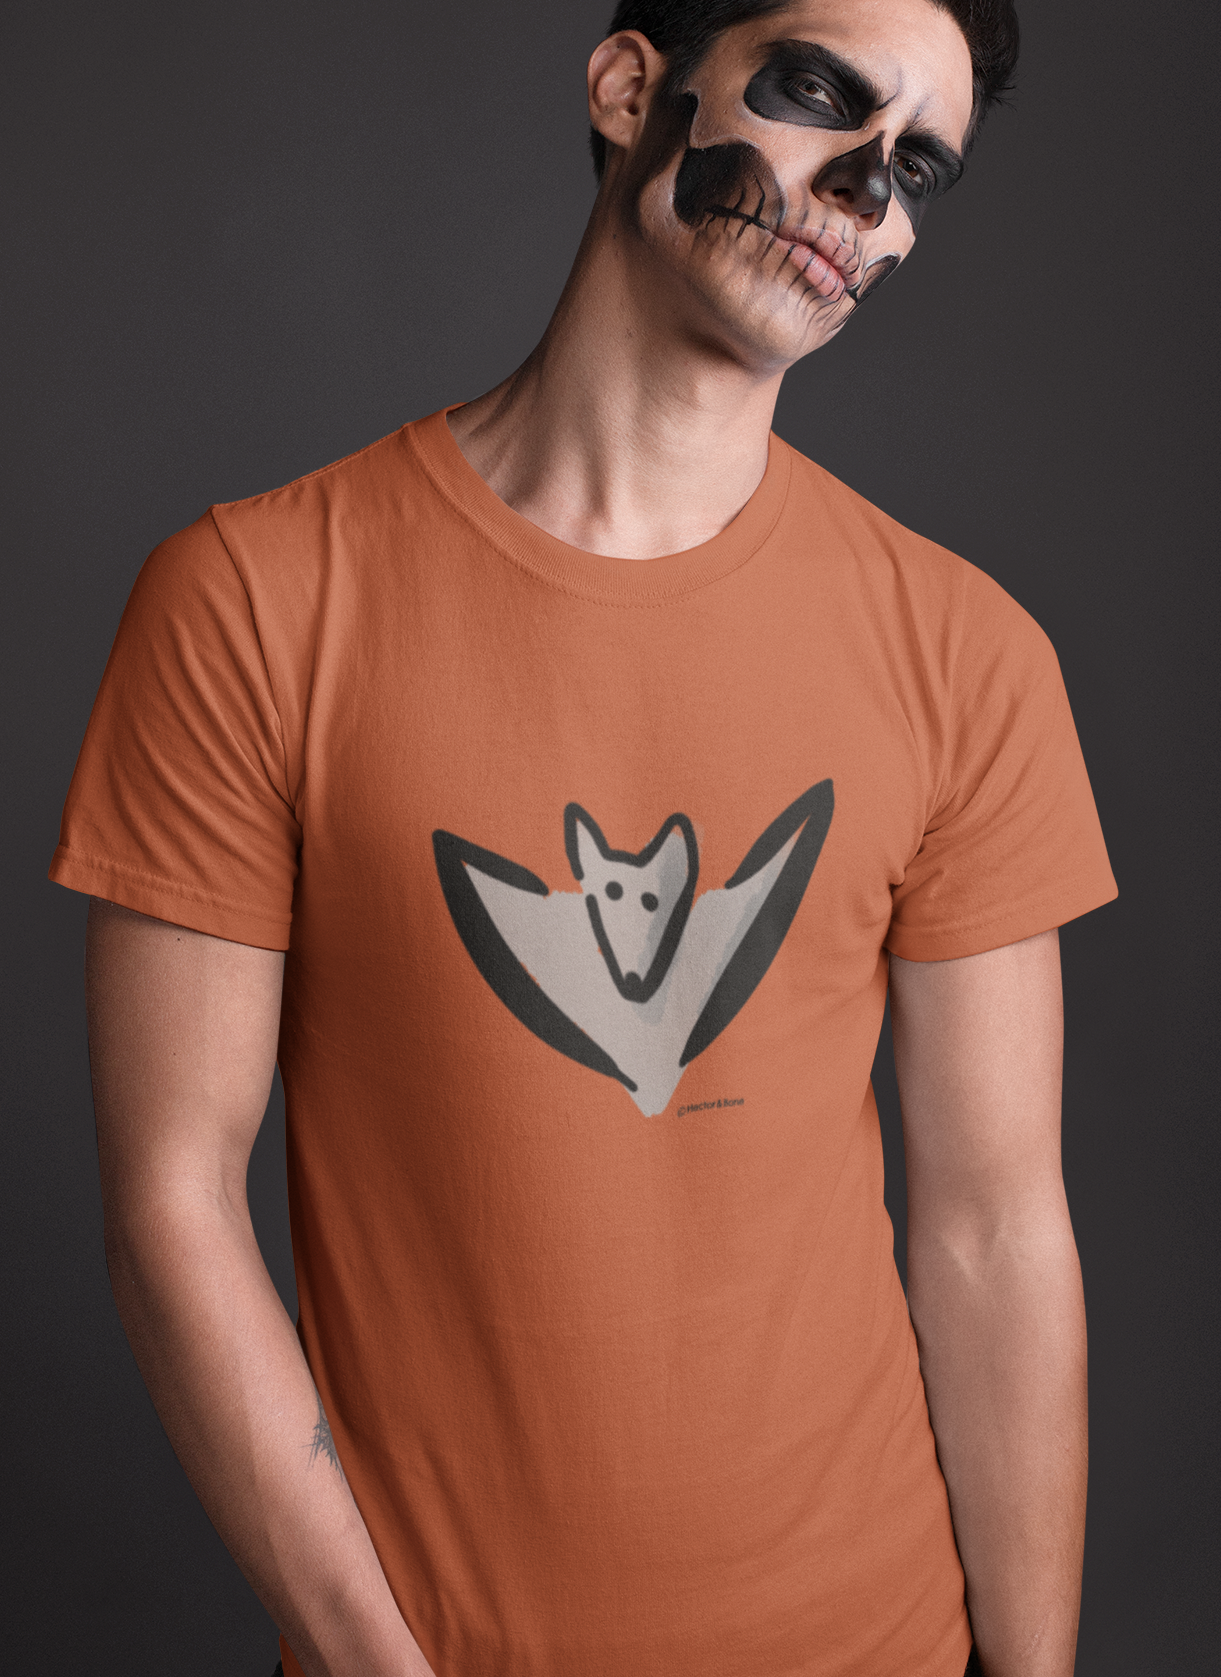 Bat T-shirt - Young man wearing an illustrated Bertie Bat T-shirt for Halloween in pumpkin orange colour vegan cotton tshirts by Hector and Bone